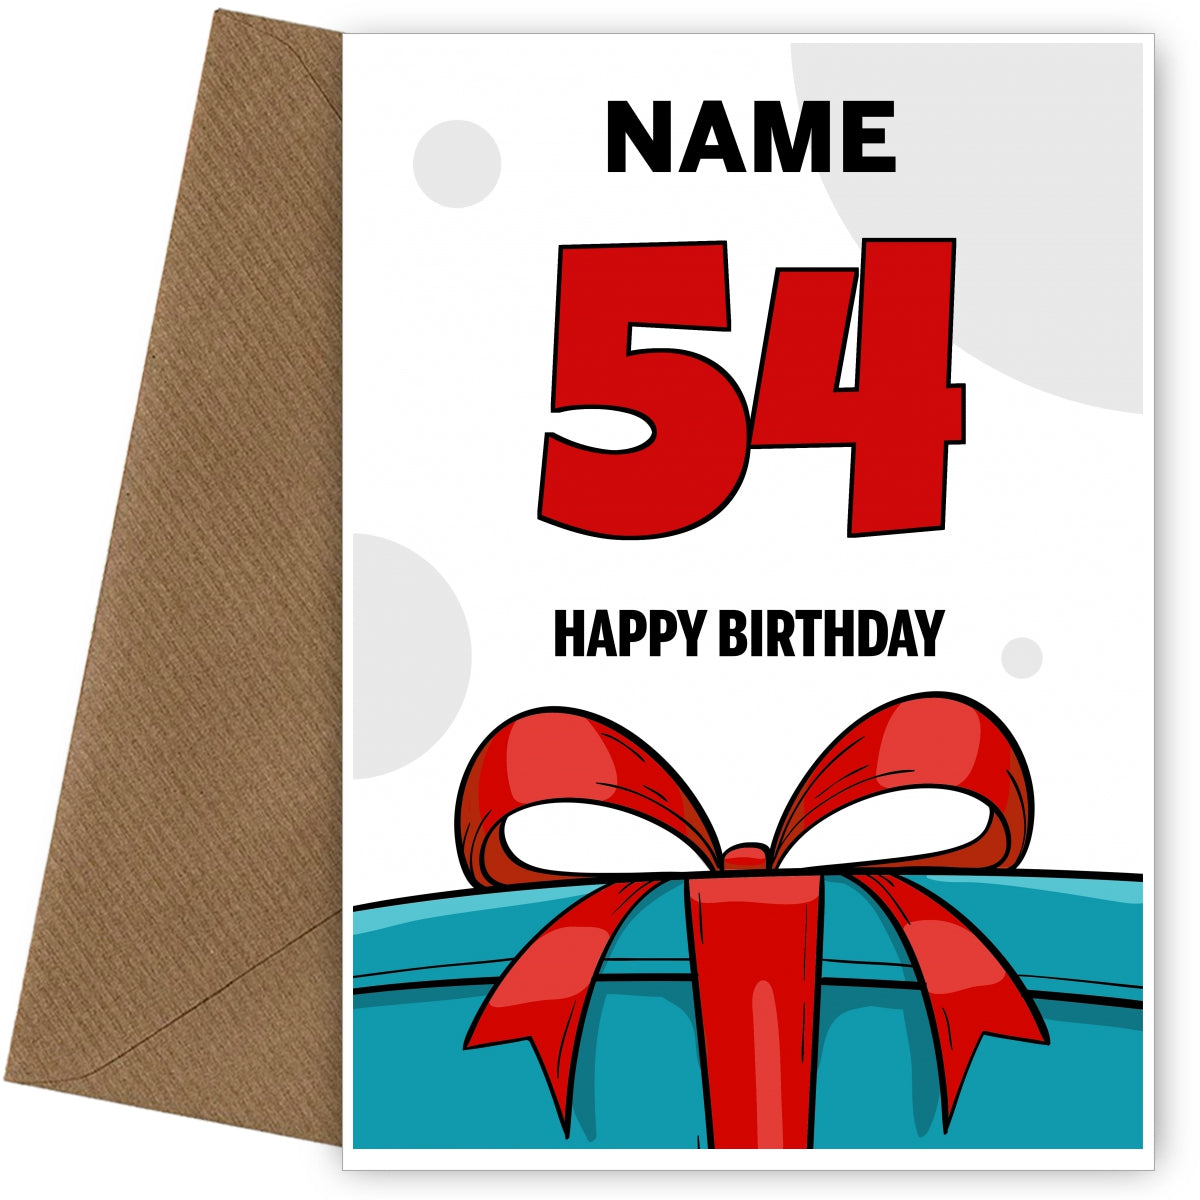 Happy 54th Birthday Card - Bold Gift / Present Design